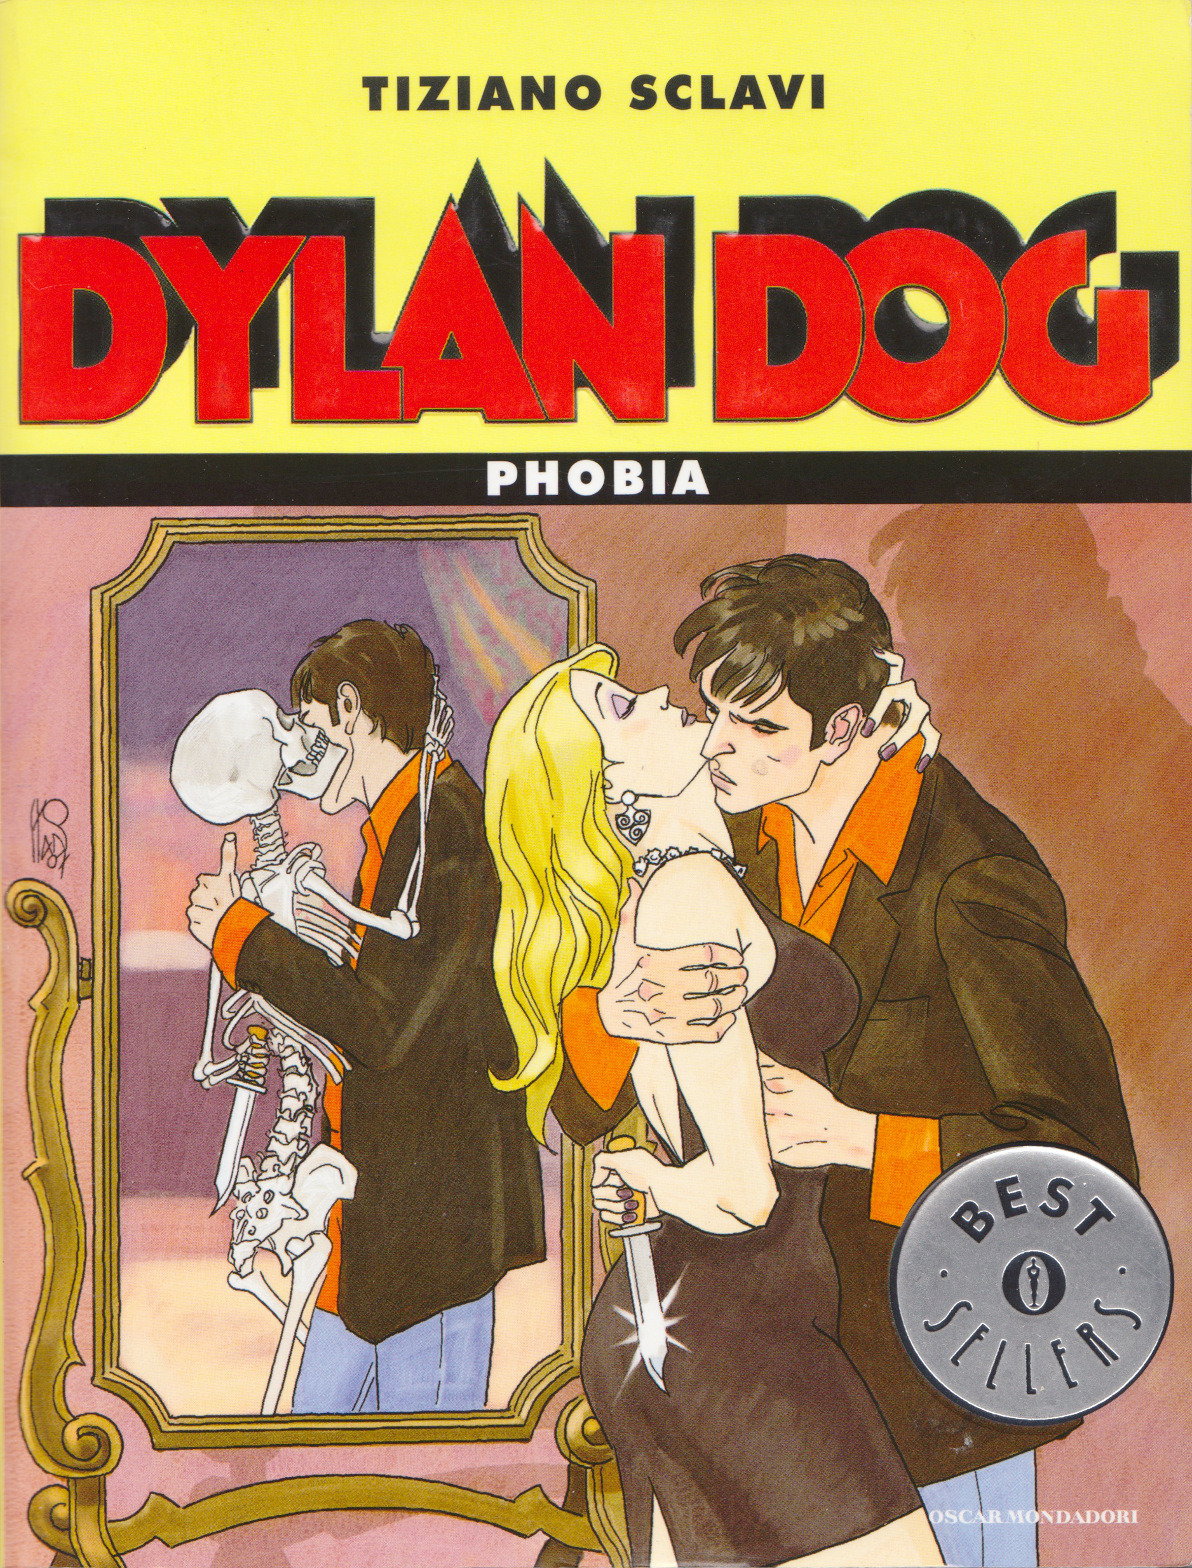 Dylan Dog: Phobia, by Tiziano Sclavi (Oscar Monandori, 2007).From a charity shop